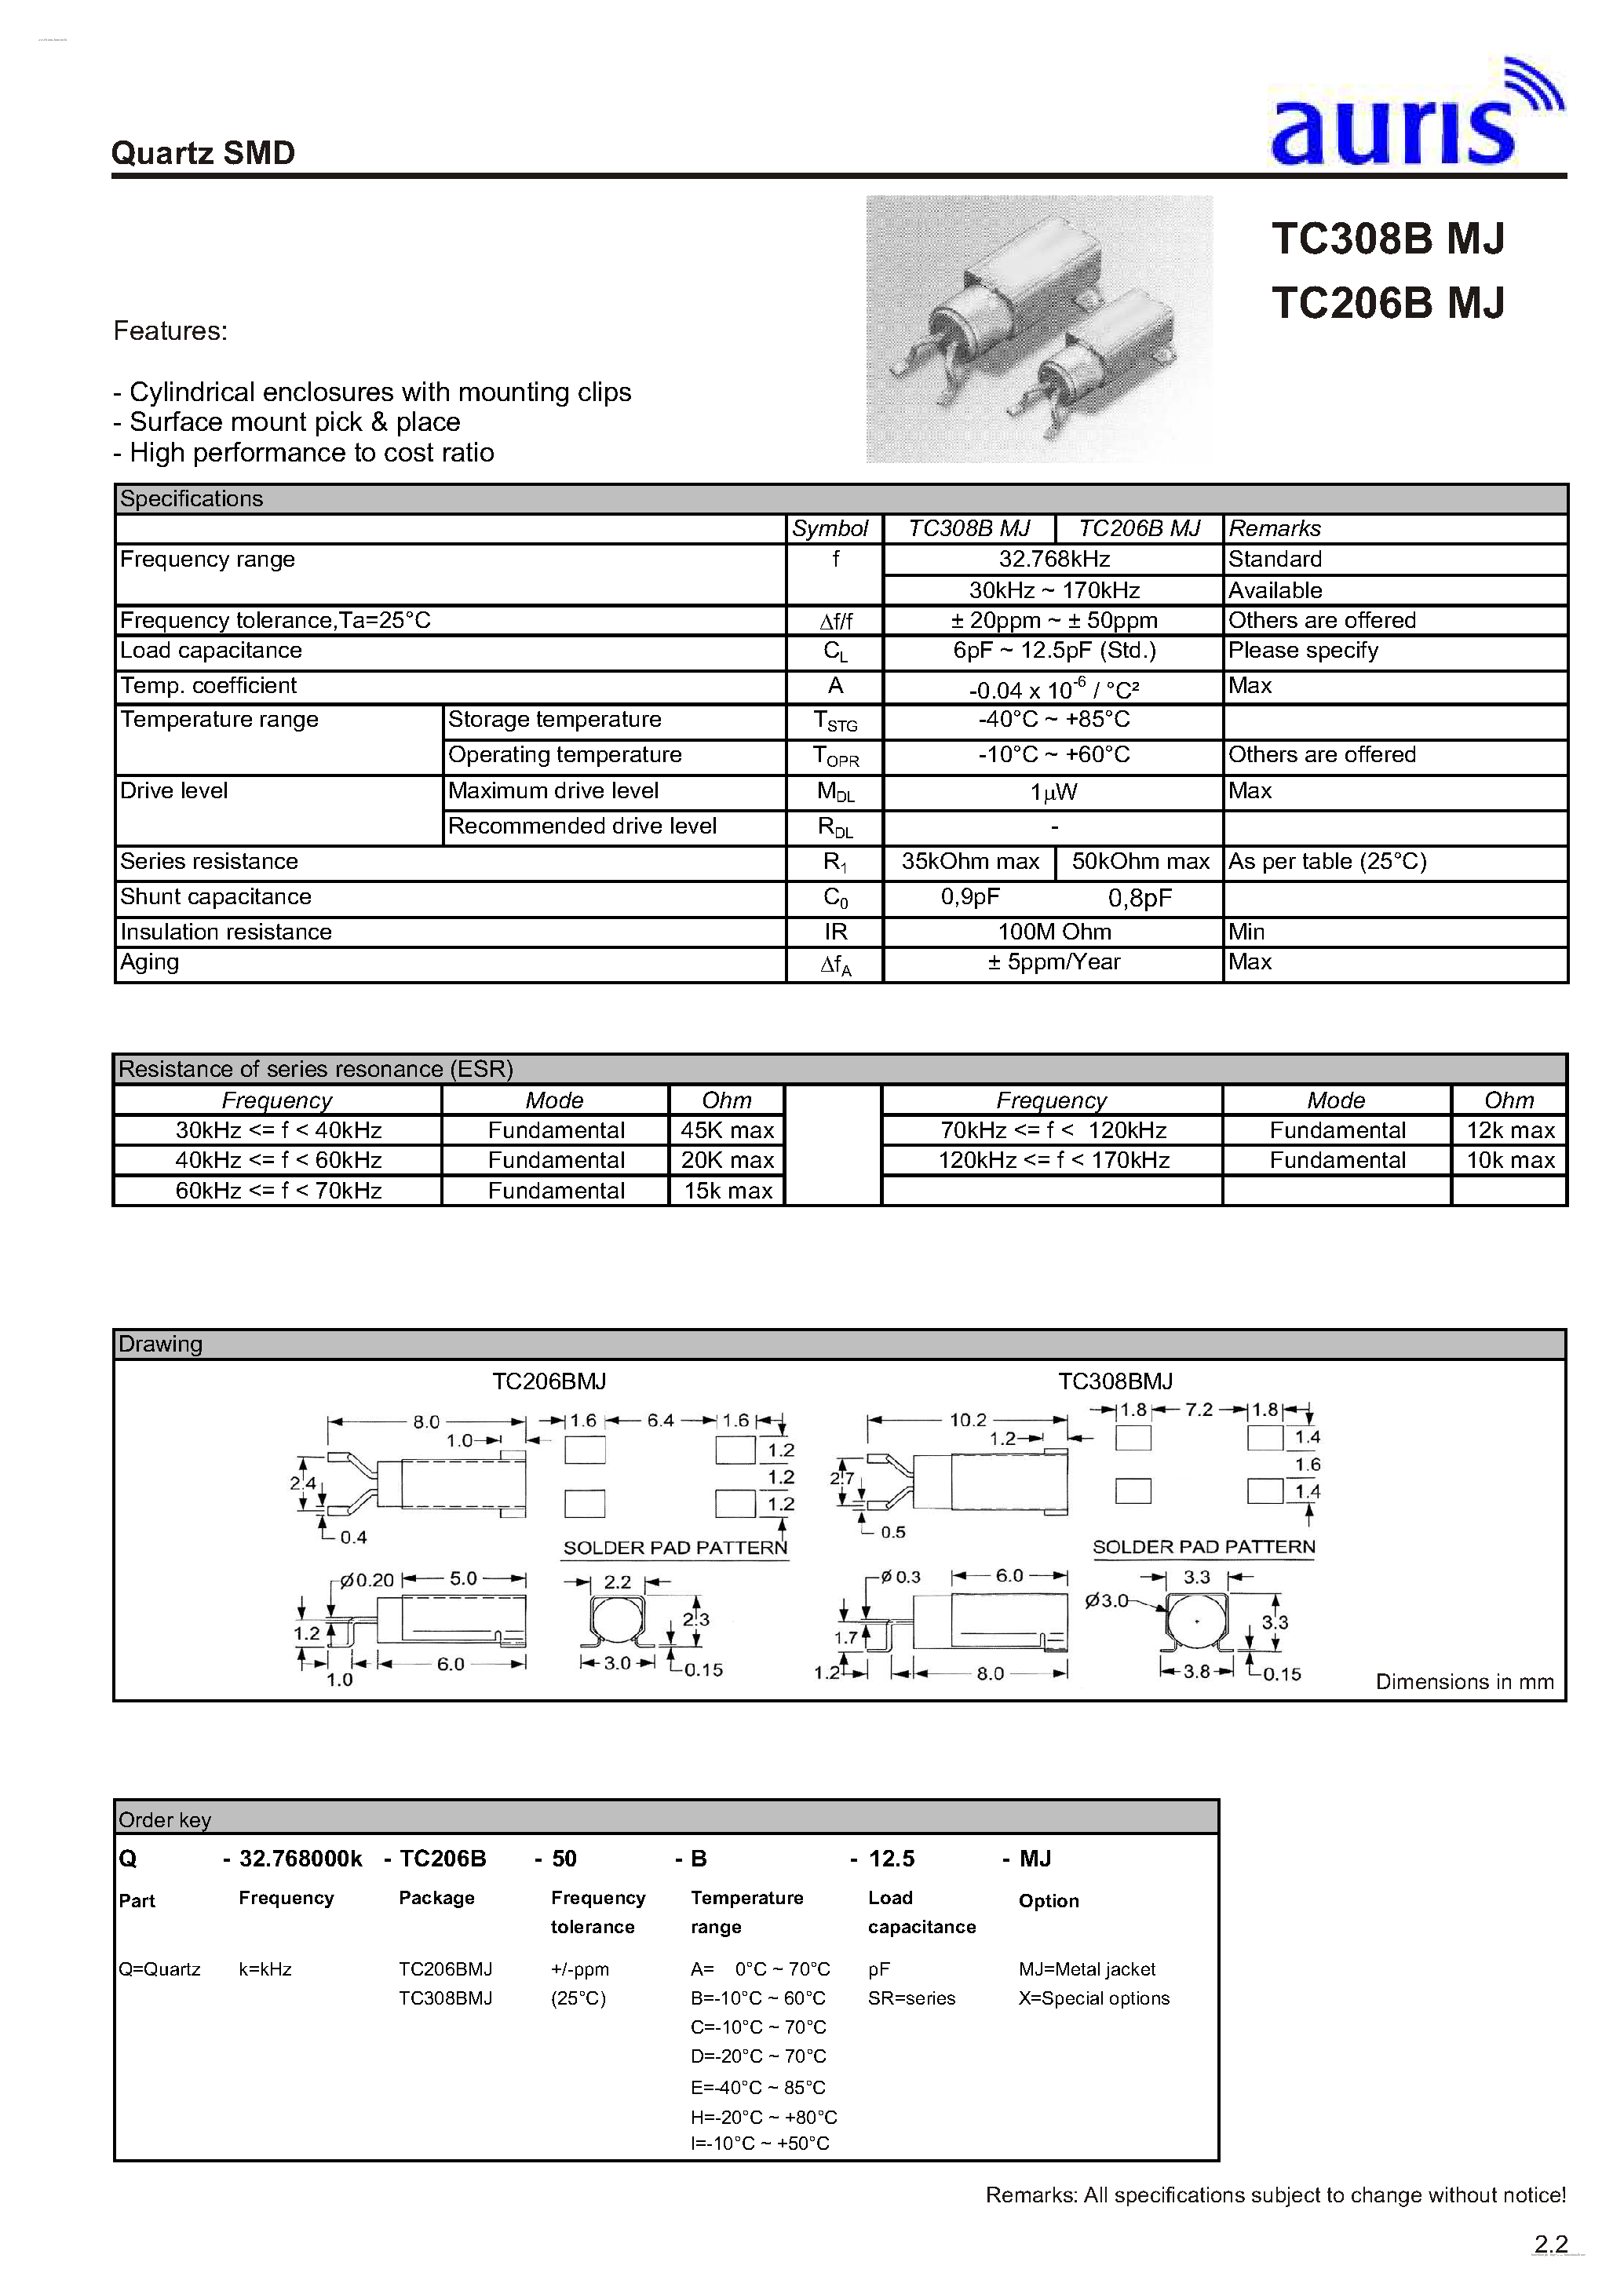 Datasheet TC308BMJ - Quartz SMD page 1